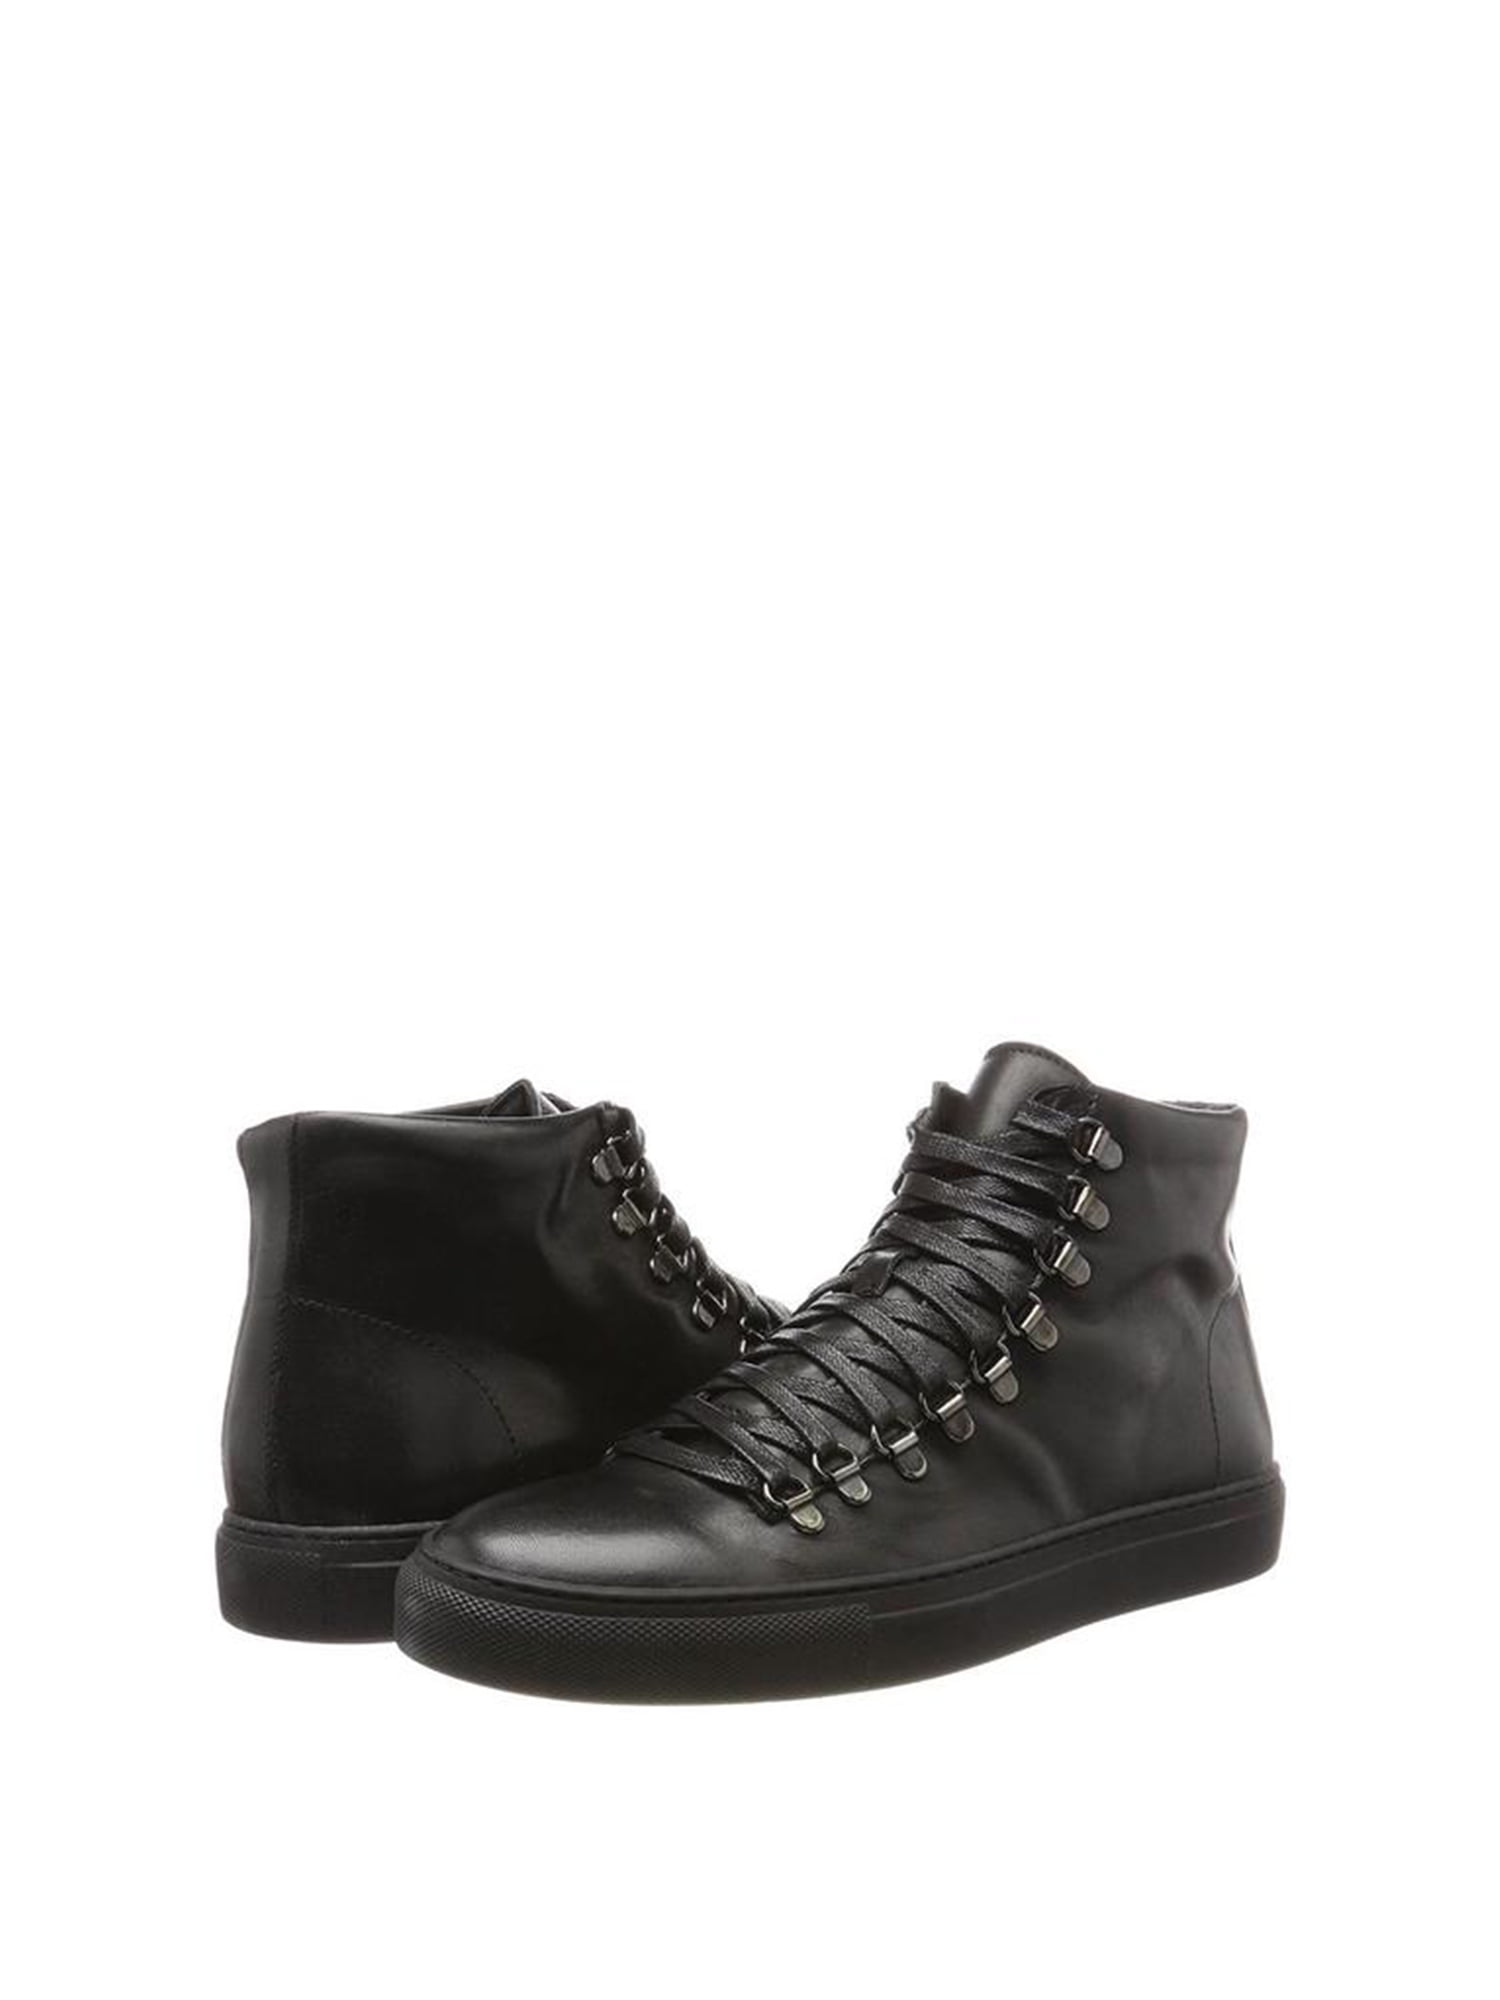 Mens Shoes Kenneth Cole Design 10775 Hi Top Sneakers KMF7LE071 Black *New* 